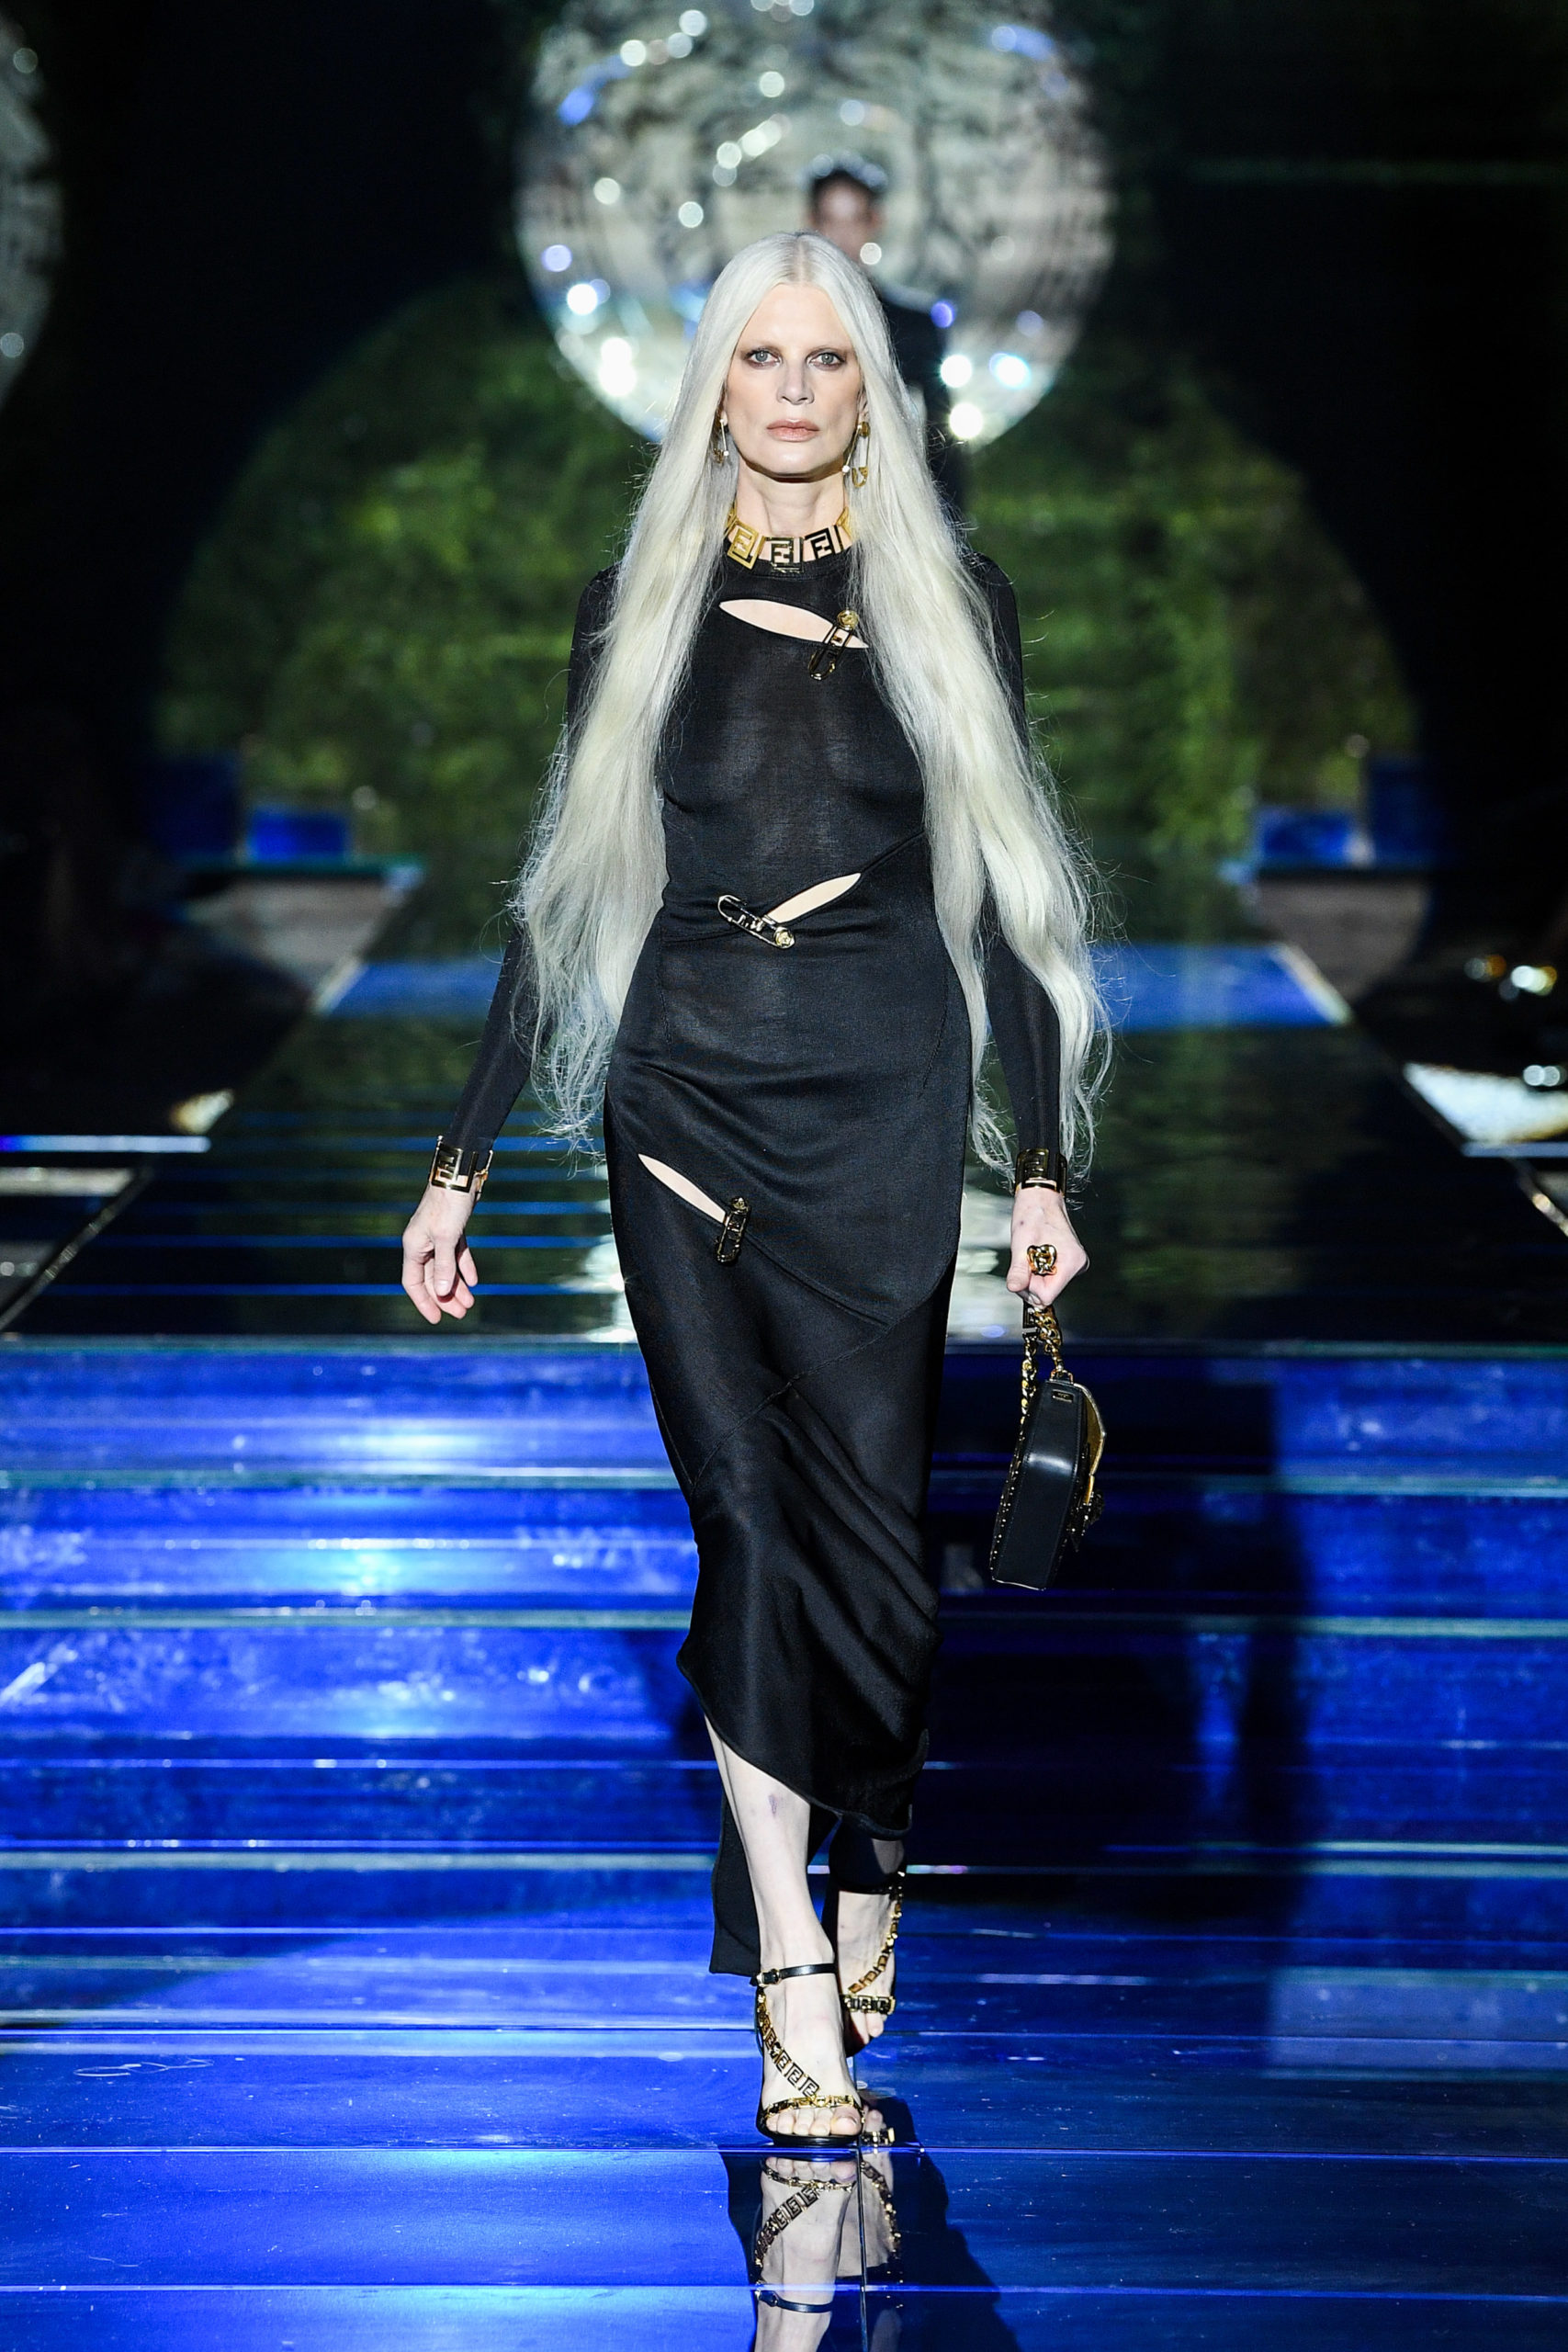 Fendi x Versace: Best of the Fendace secret show at Milan Fashion Week